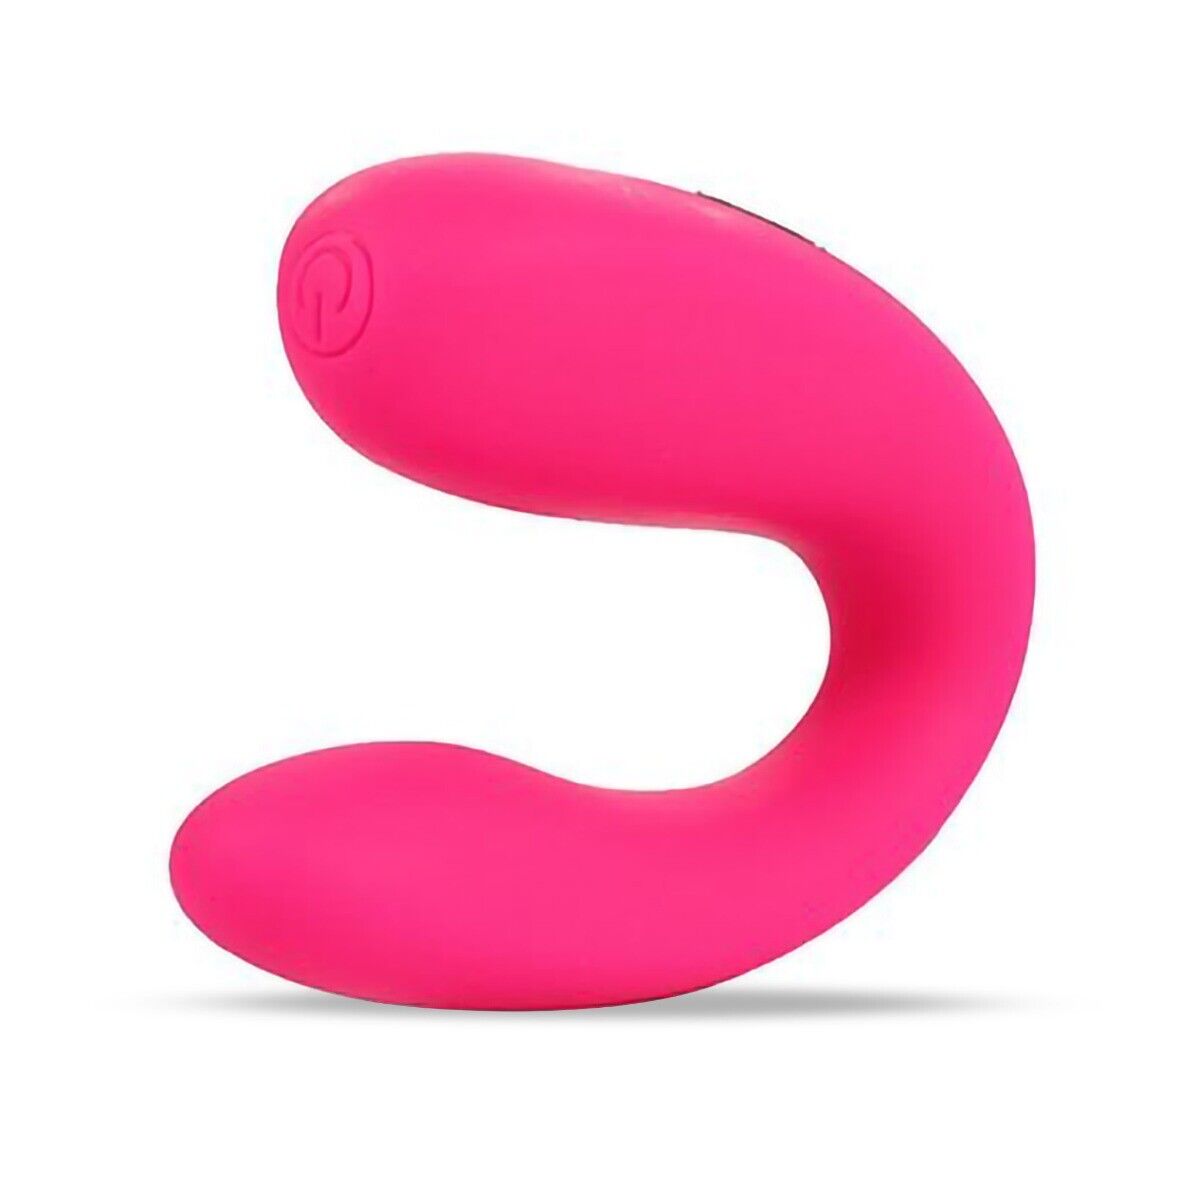 U Shape Clit Vibrator Stimulator Wearable During Sex Toys for Couples Women